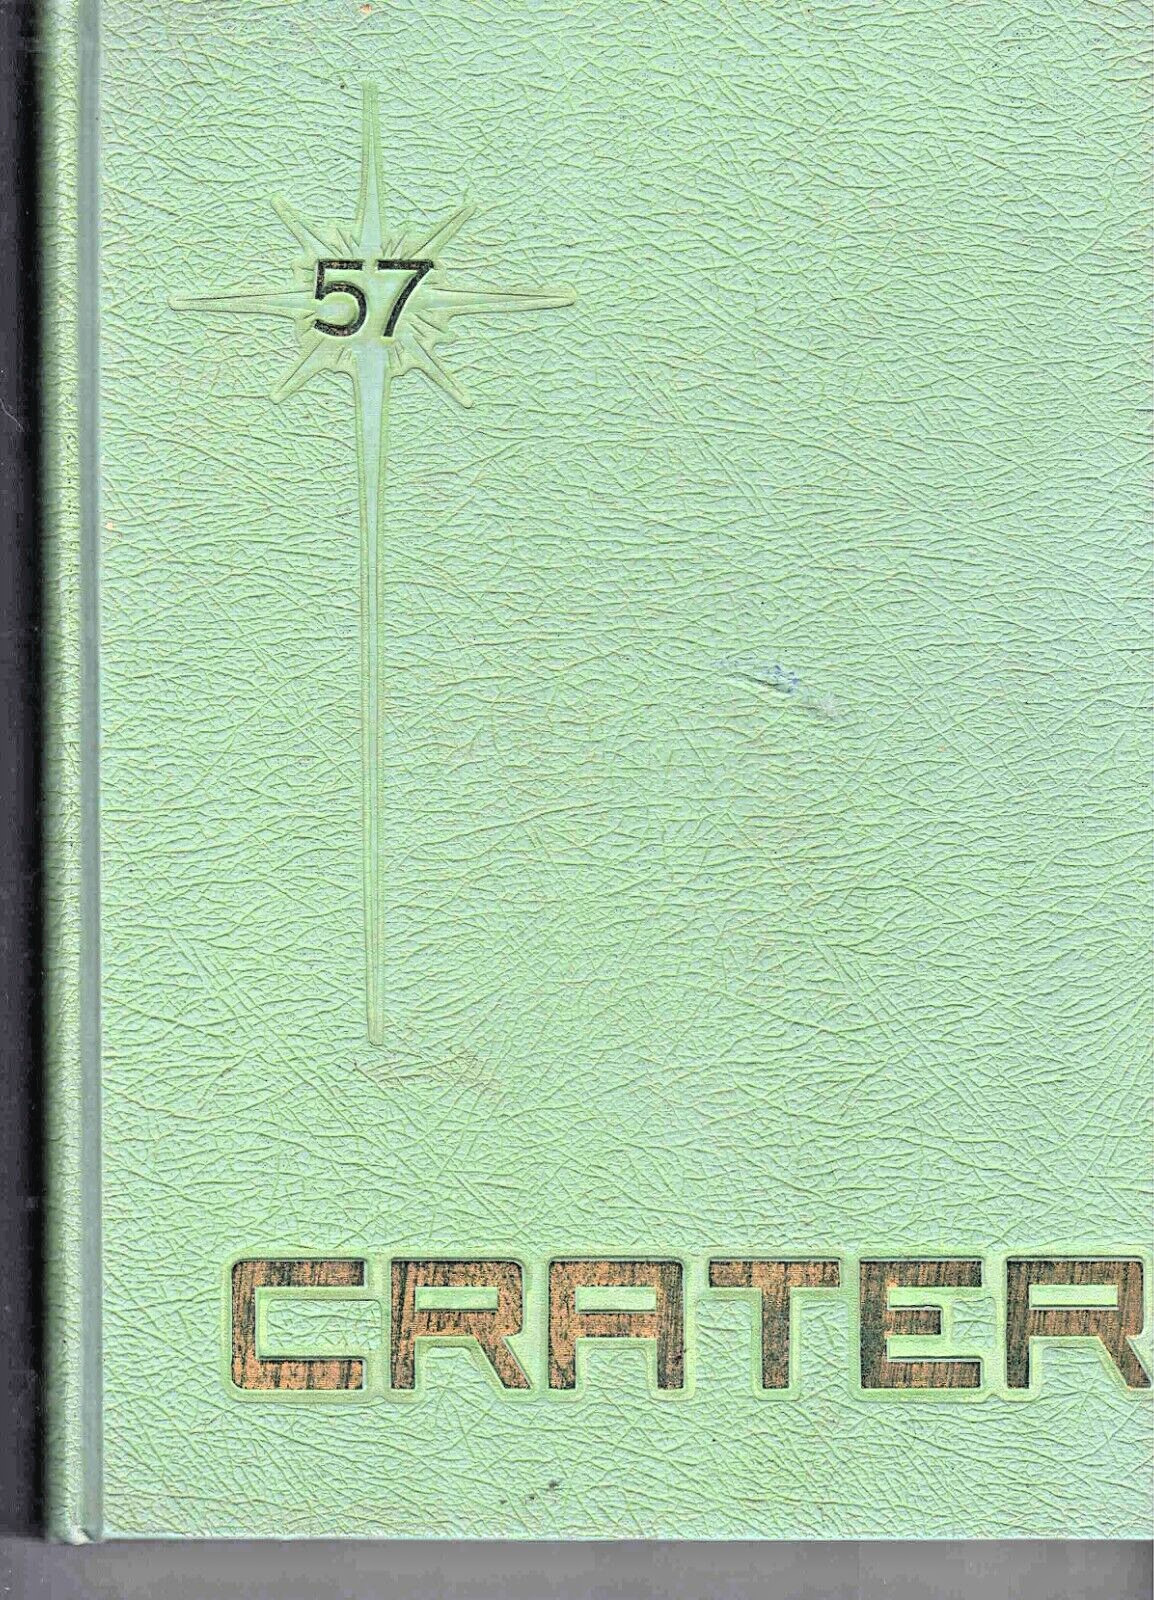 1957 Medford High School Yearbook, Crater, Medford, Oregon